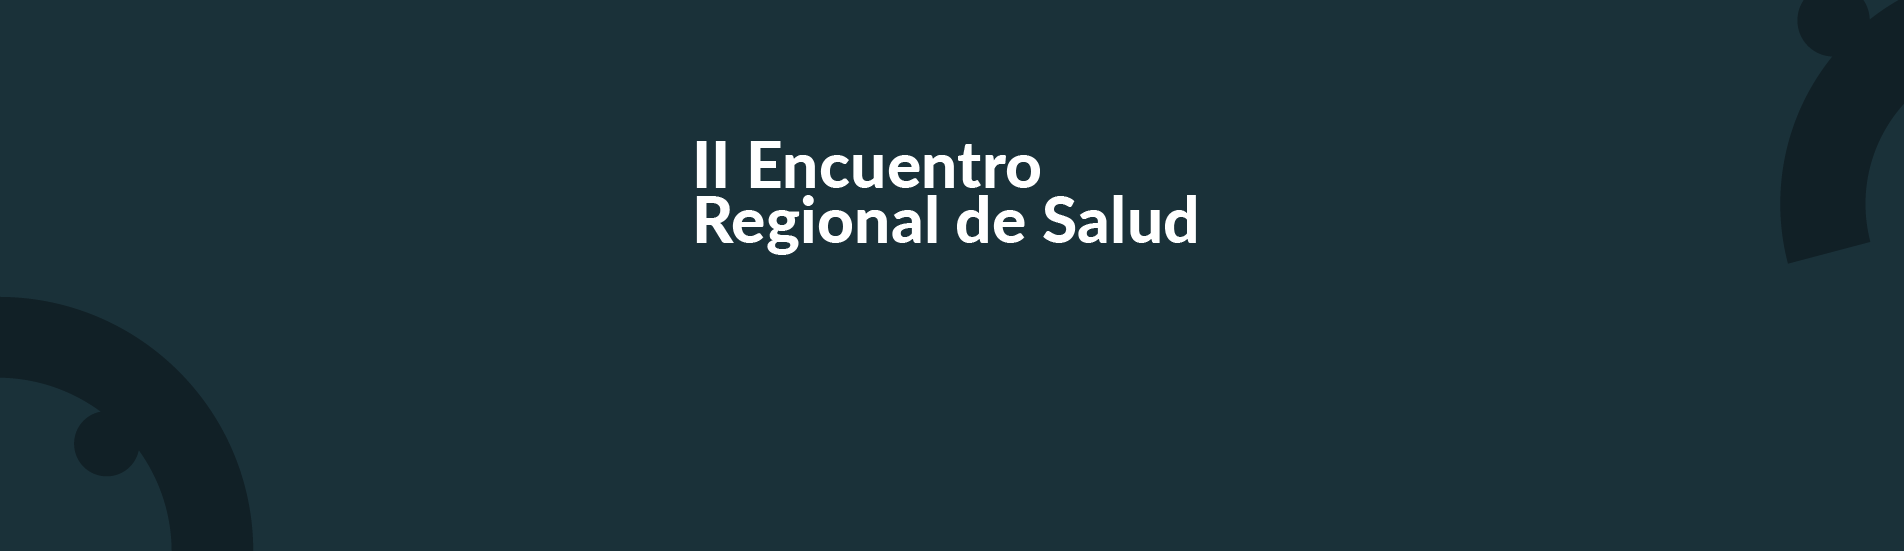 Banner-web-encuentroregional-2-1